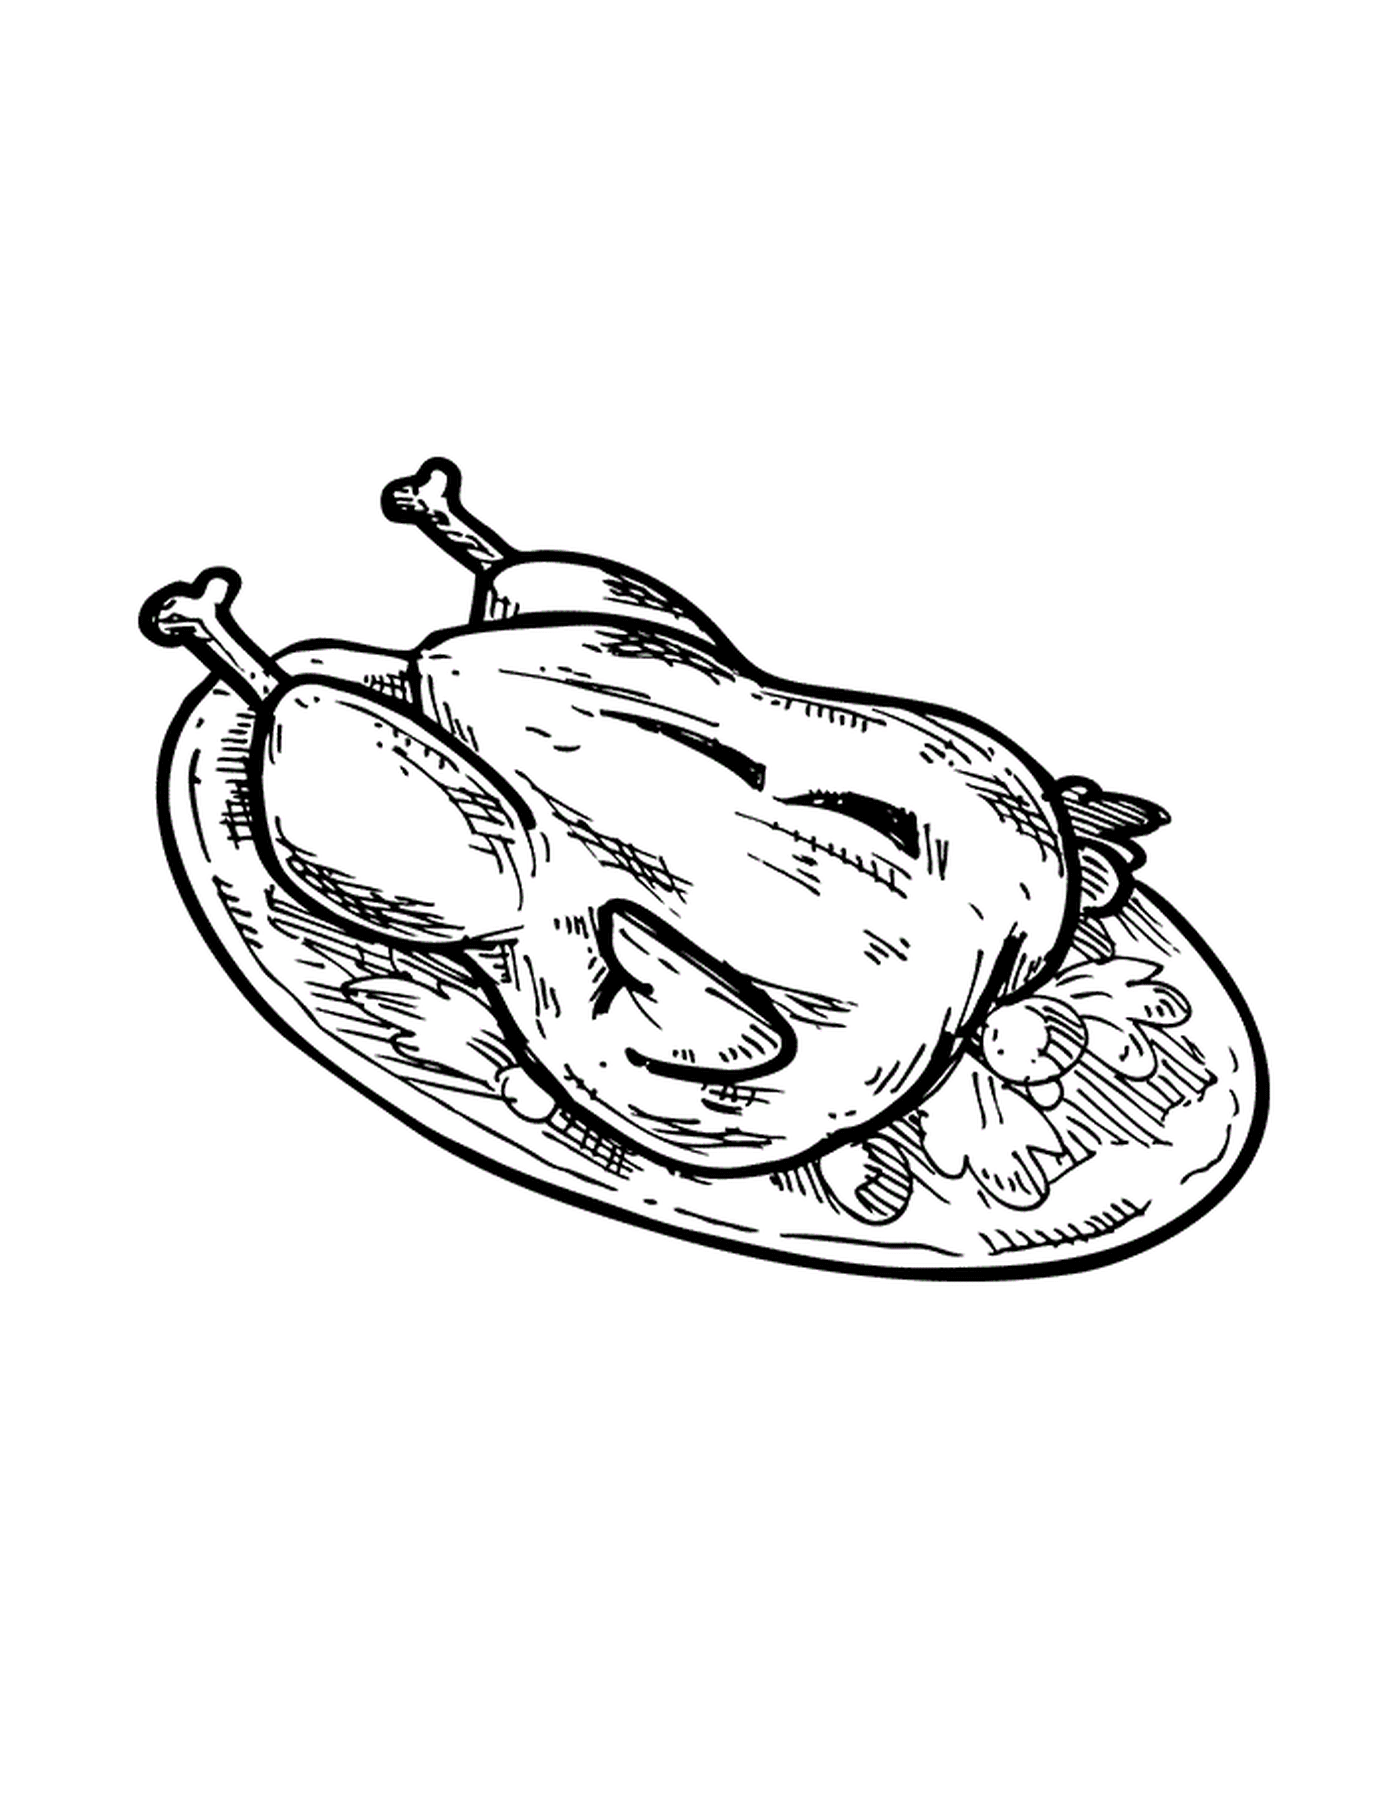  Turkey on a plate 